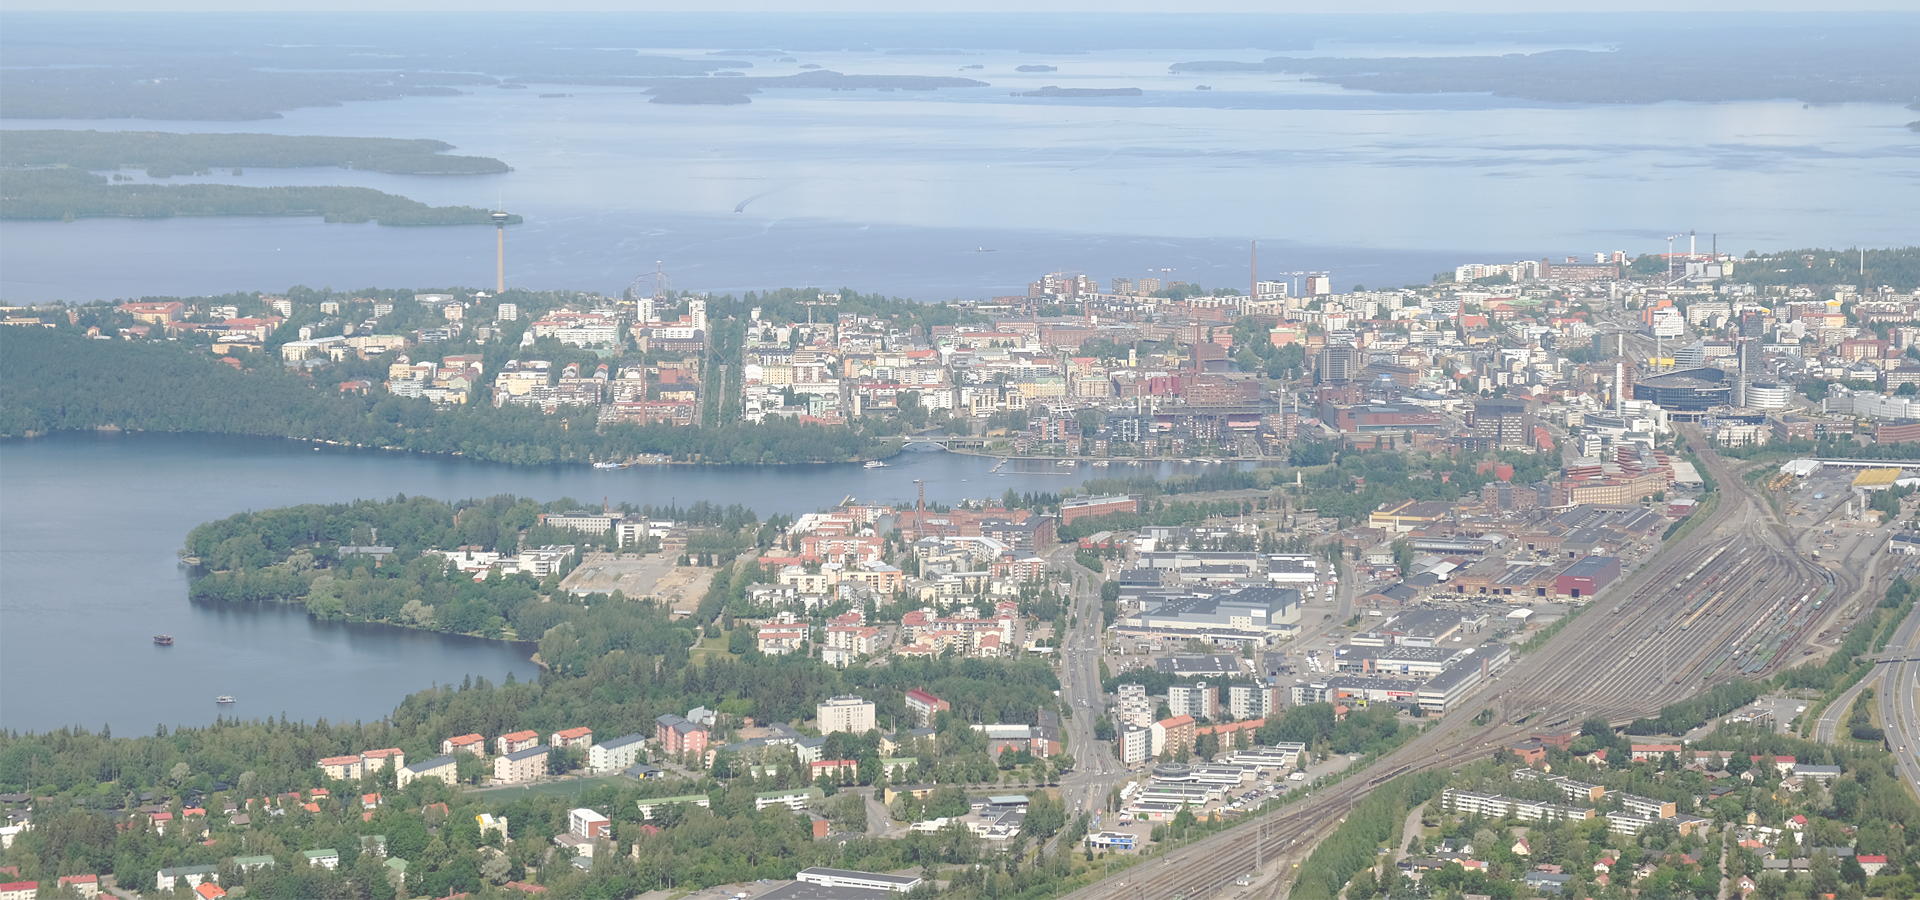 <b>Tampere, Pirkanmaa Region, Finland</b>